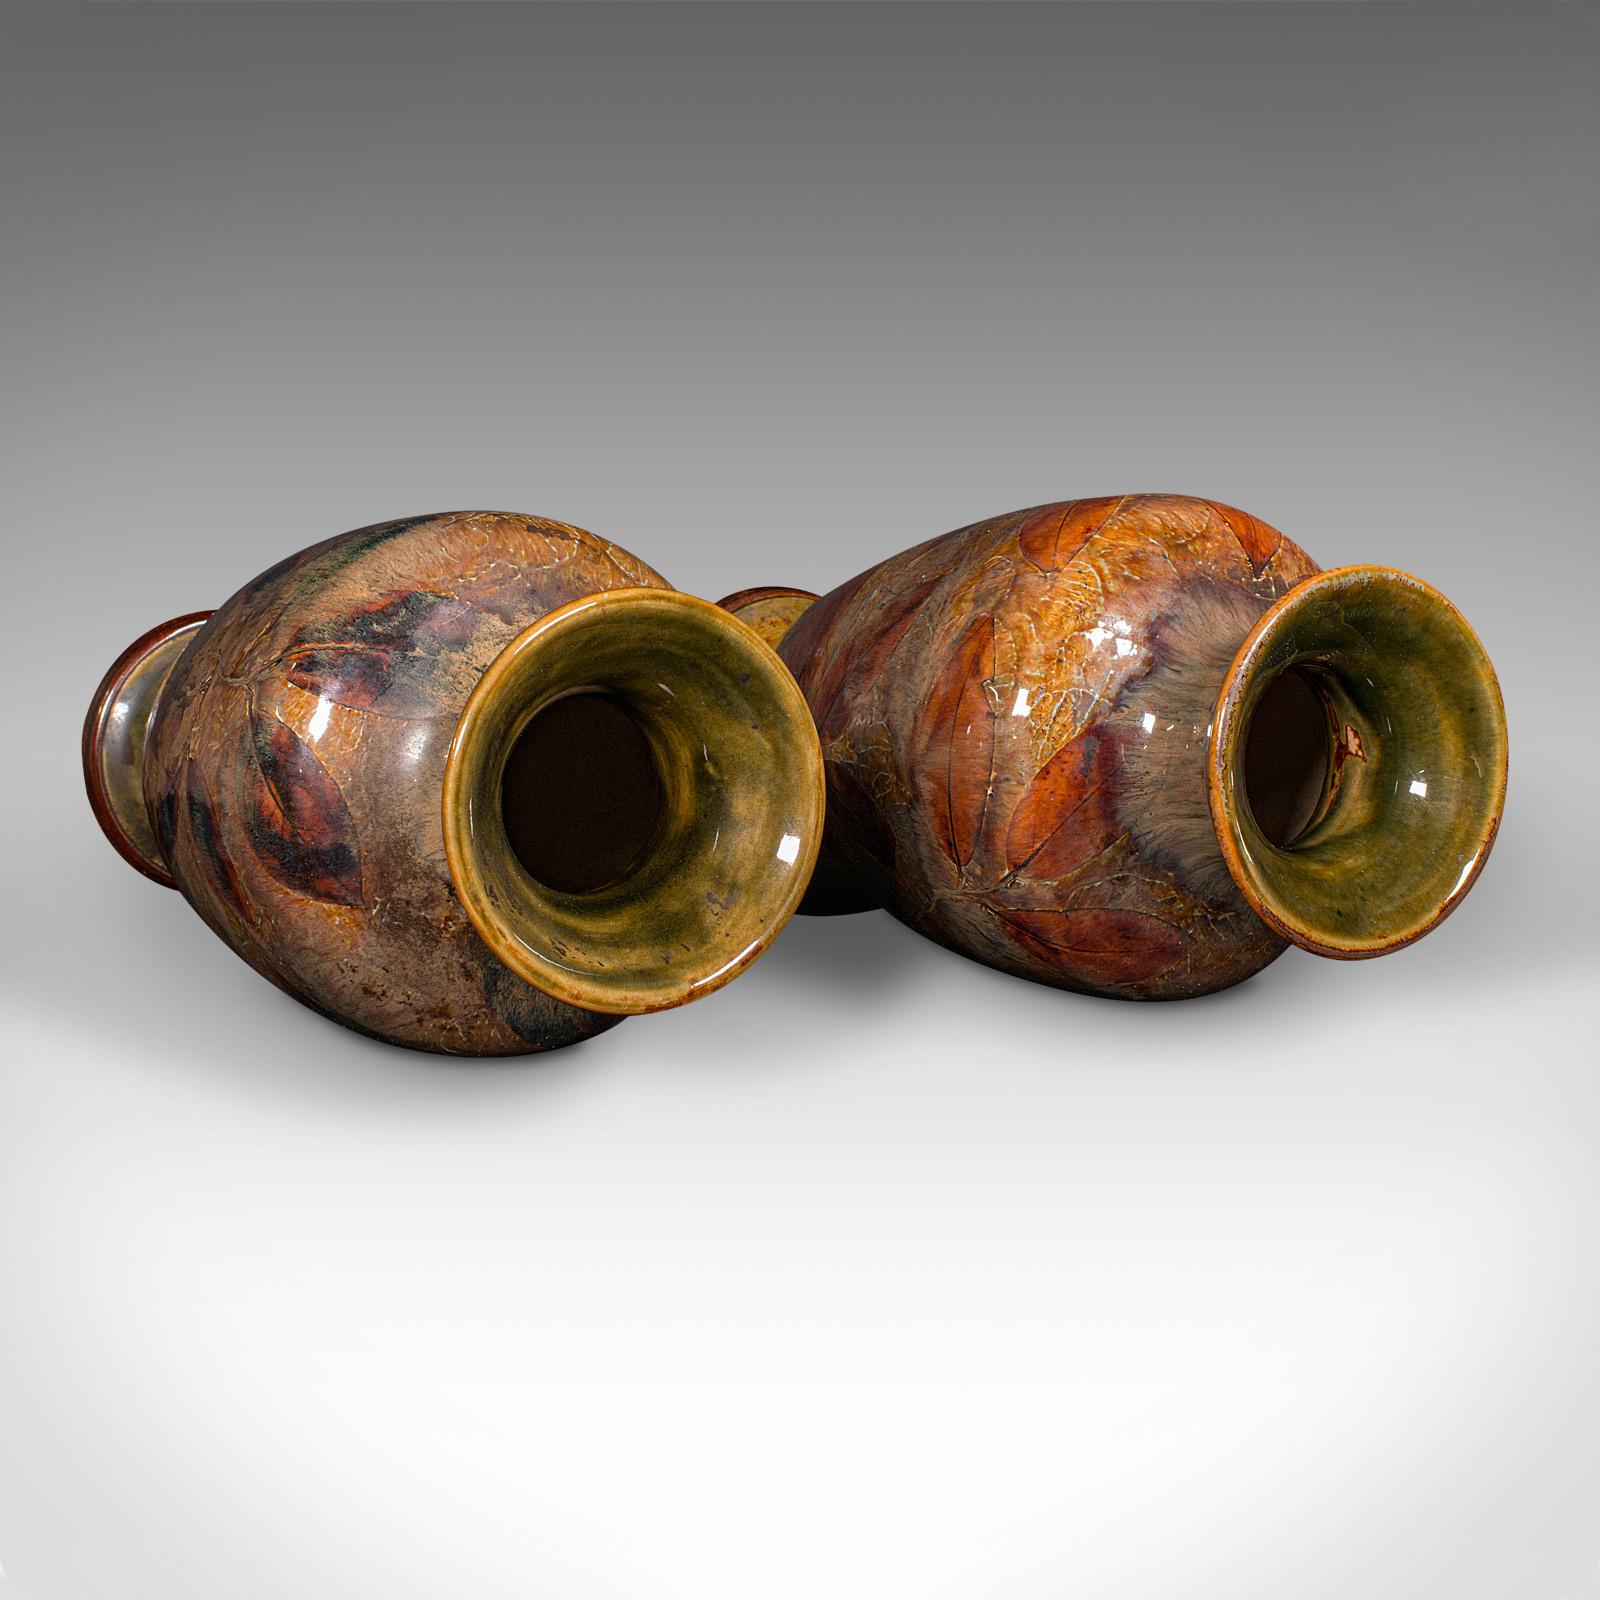 Antique Pair Of Decorative Vases, English, Ceramic Flower Urn, Edwardian, C.1910 For Sale 2